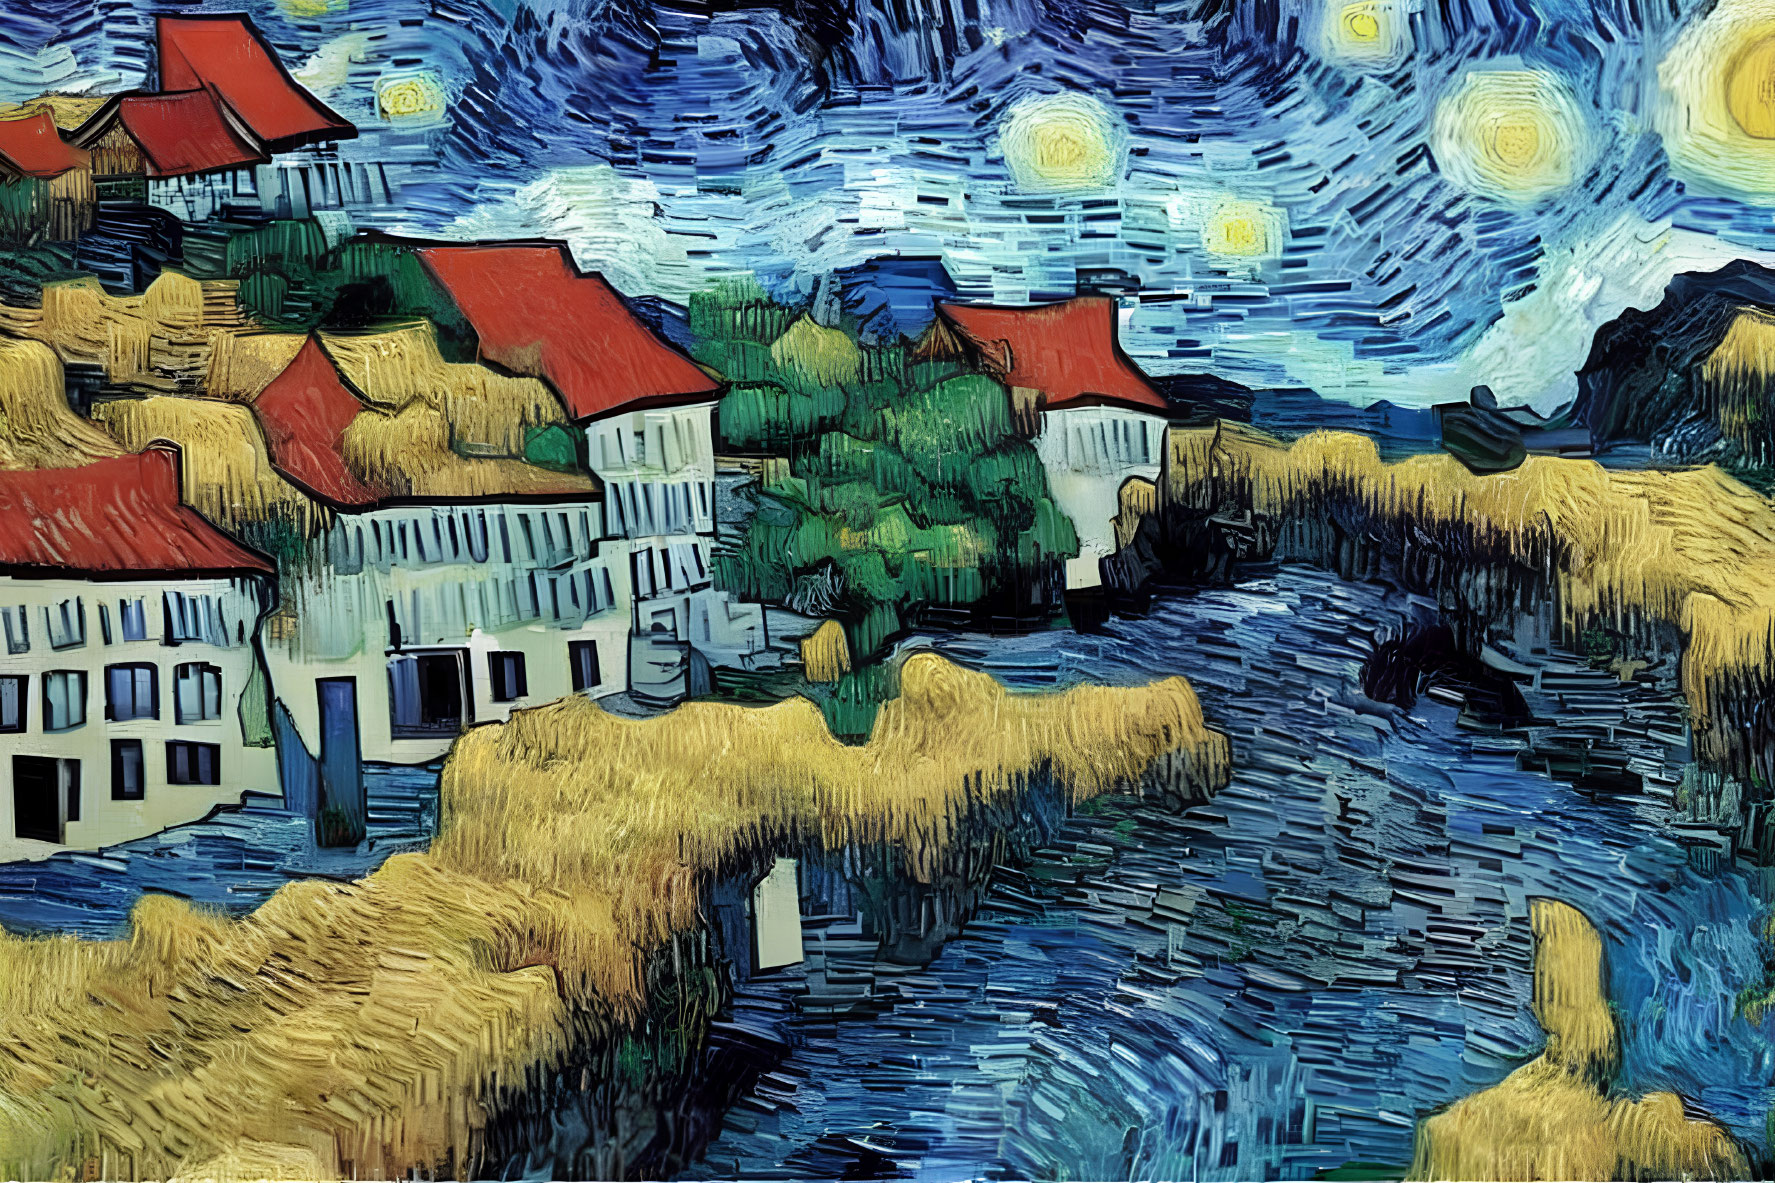 Vibrant Van Gogh-style painting of starry night over quaint village